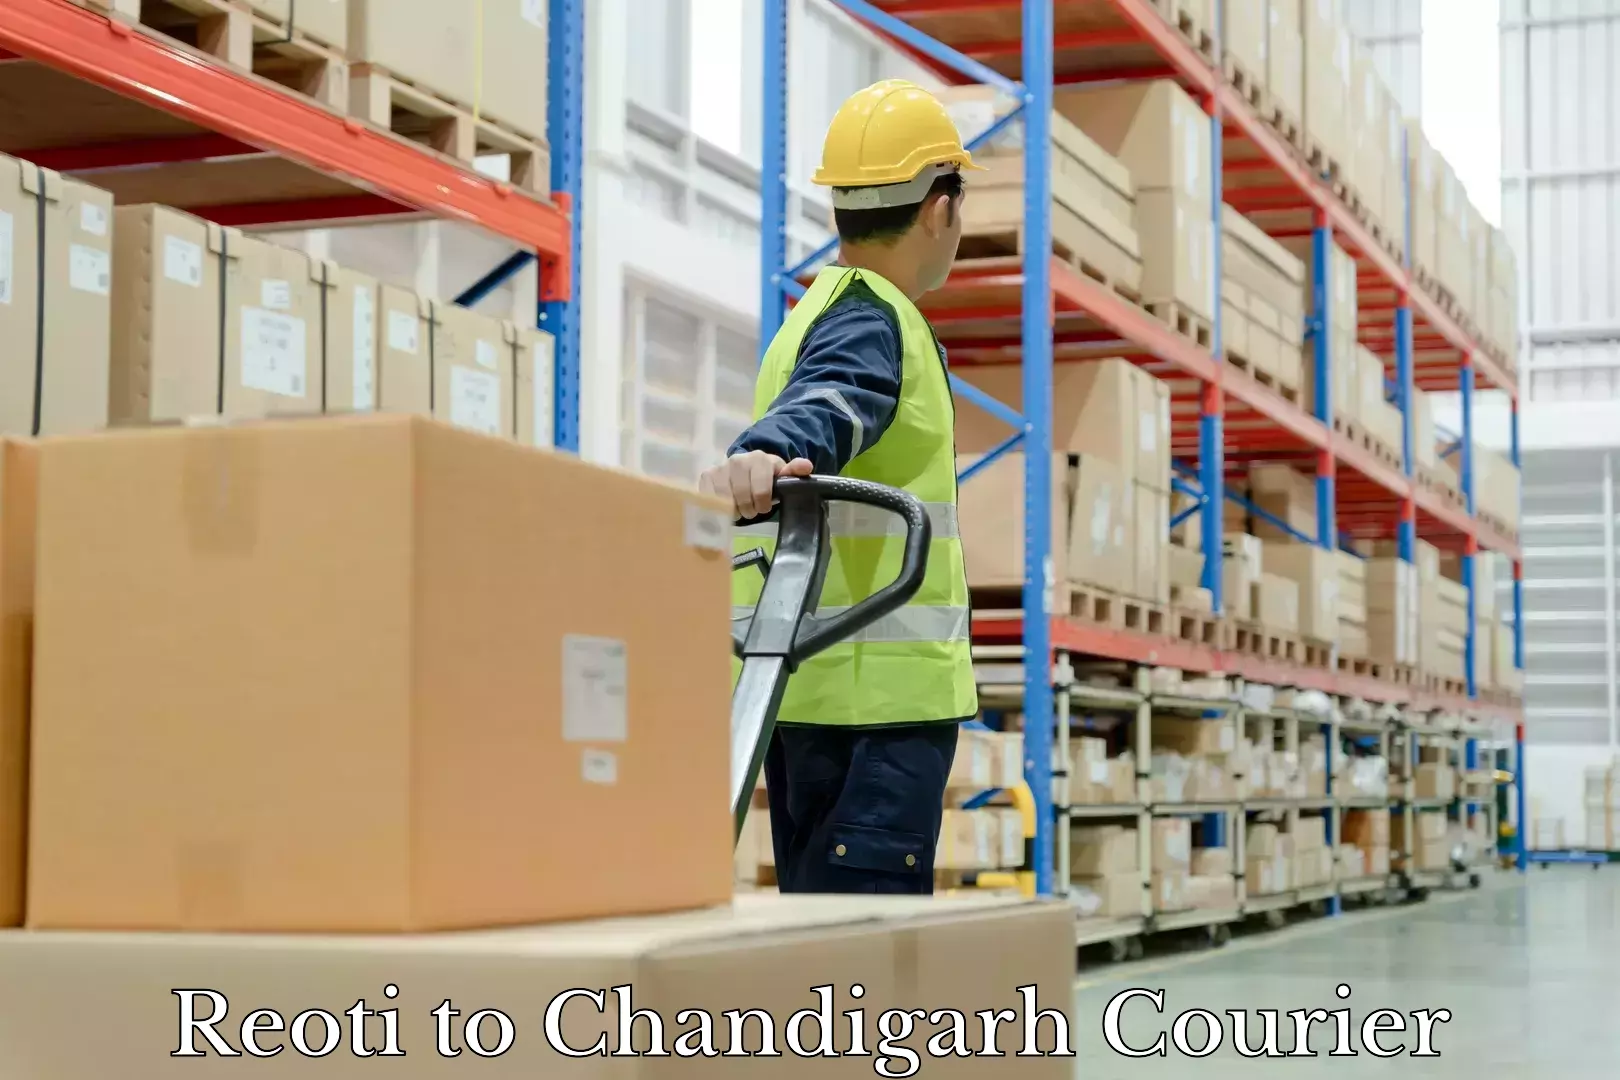 Luggage transport company Reoti to Chandigarh